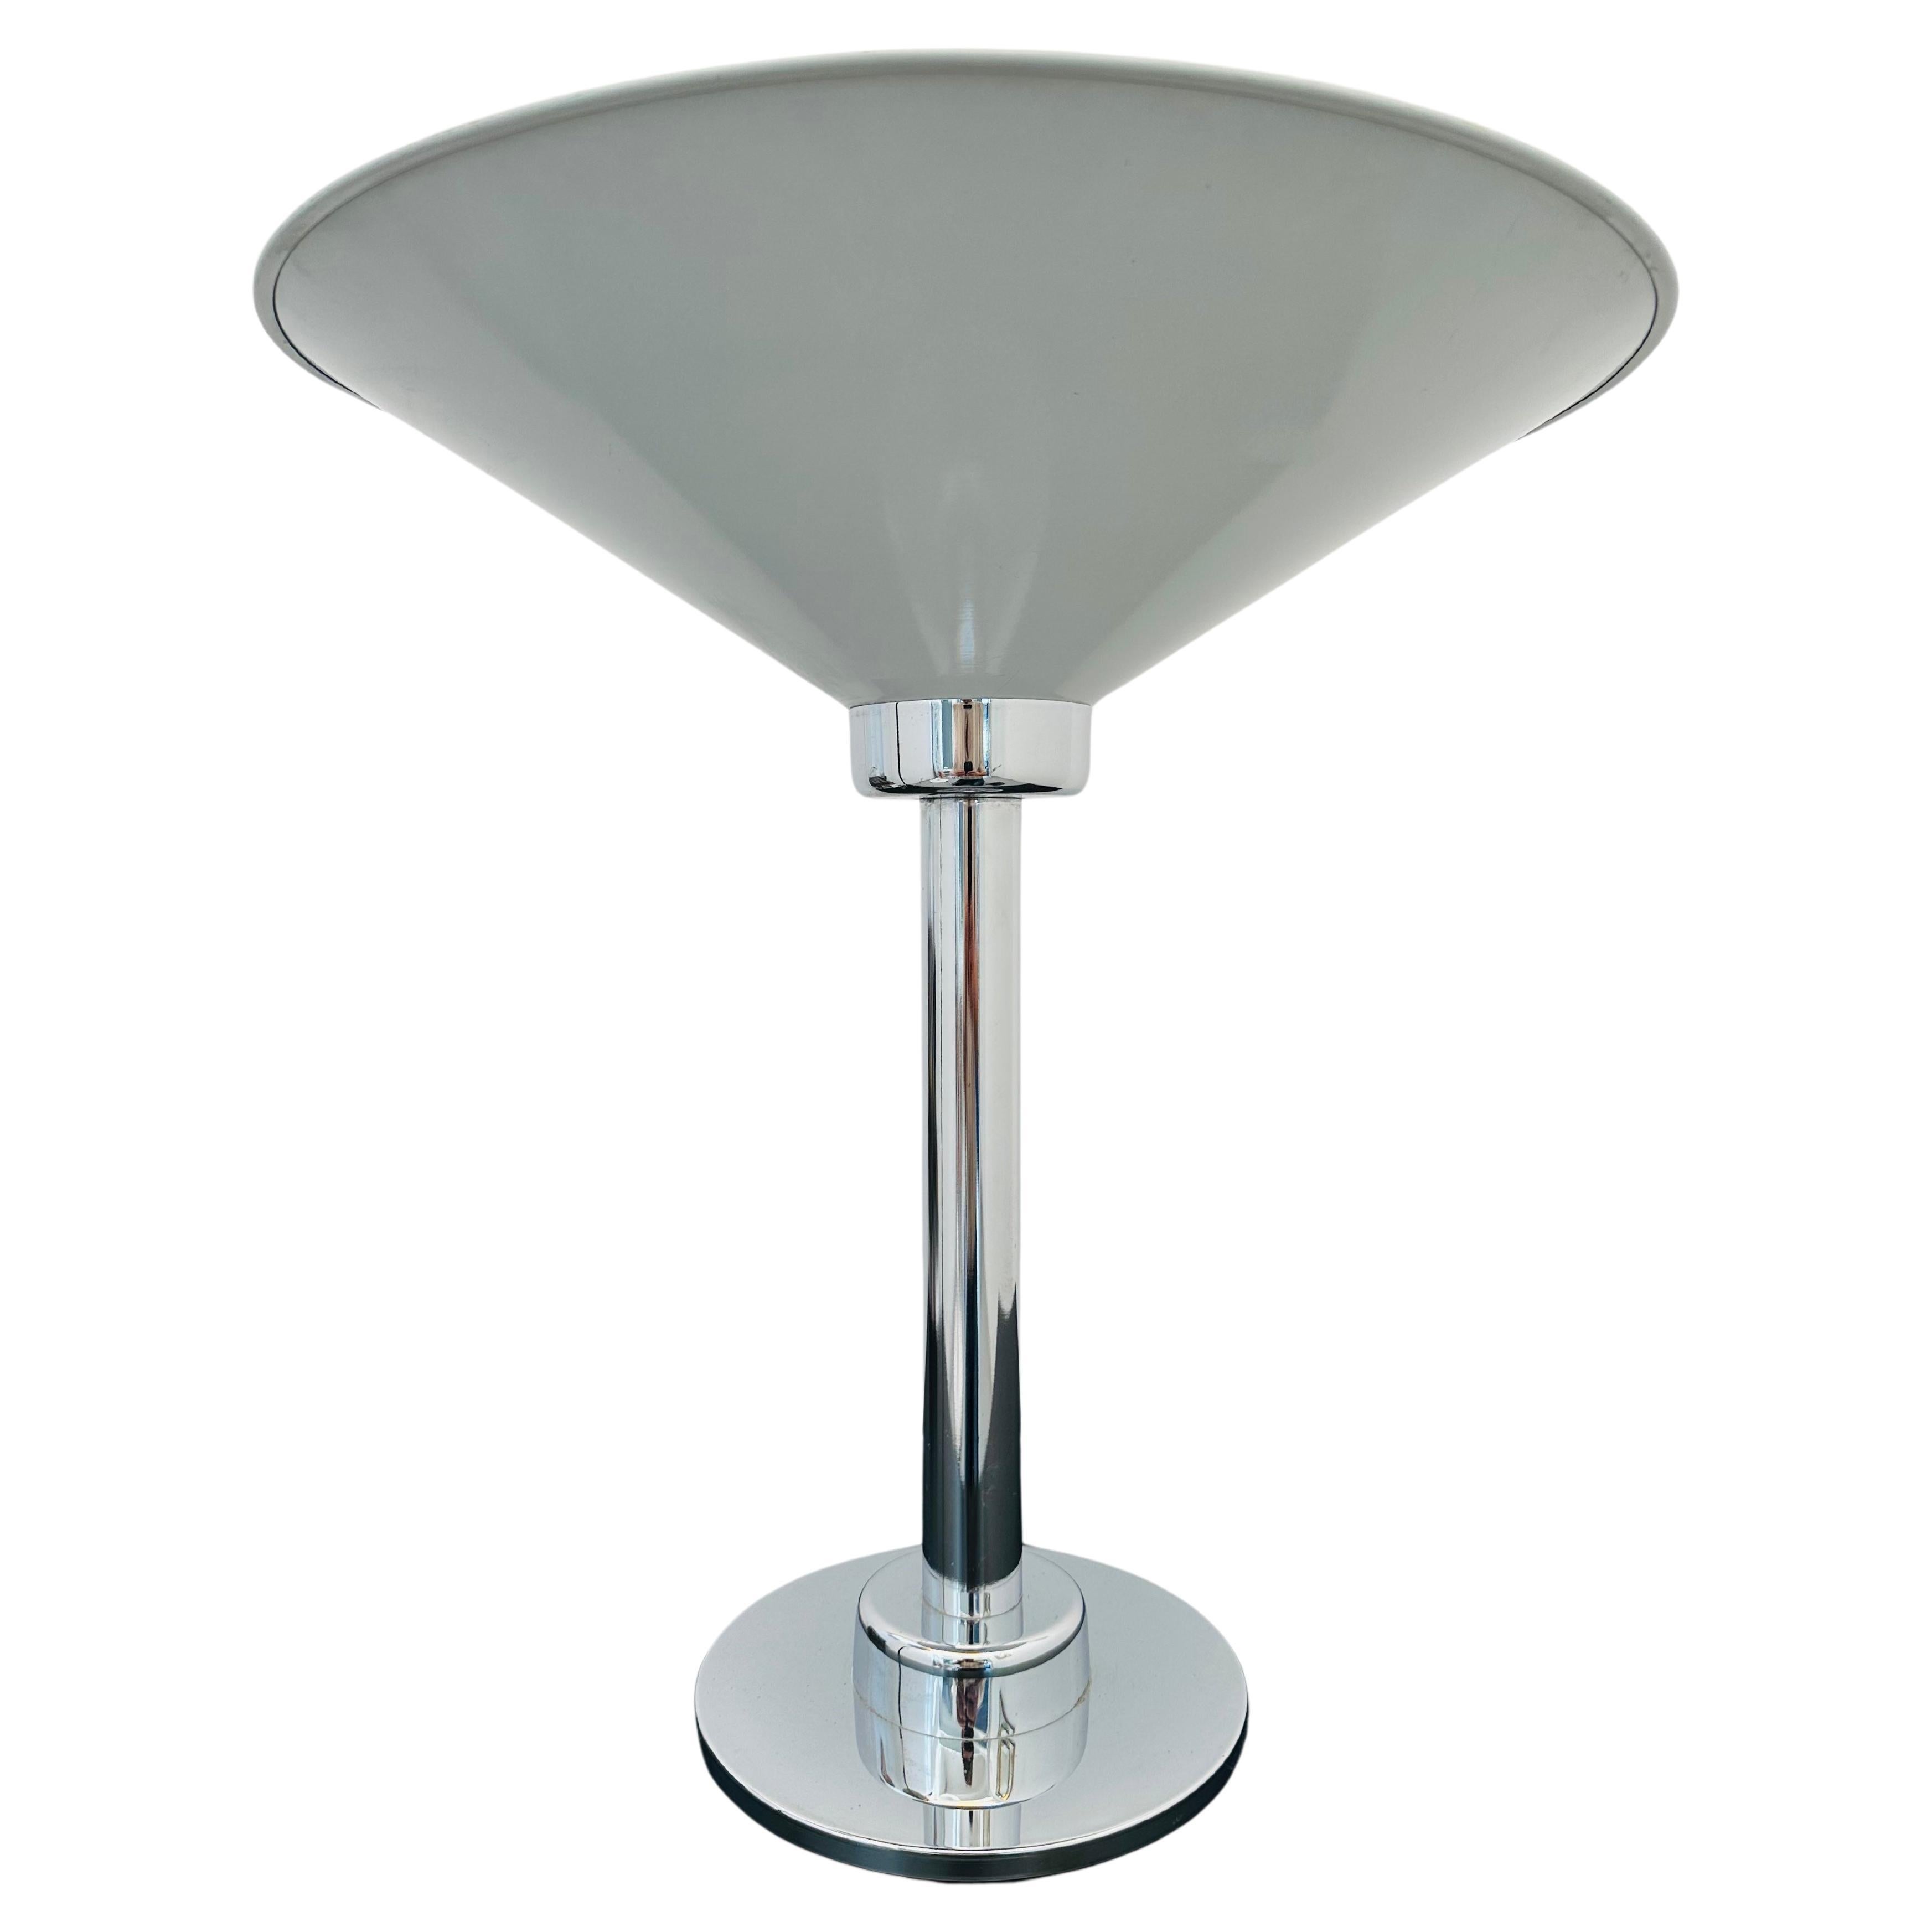 1970s Italian Conical Enamelled White Metal & Chrome Uplighter Table Lamp